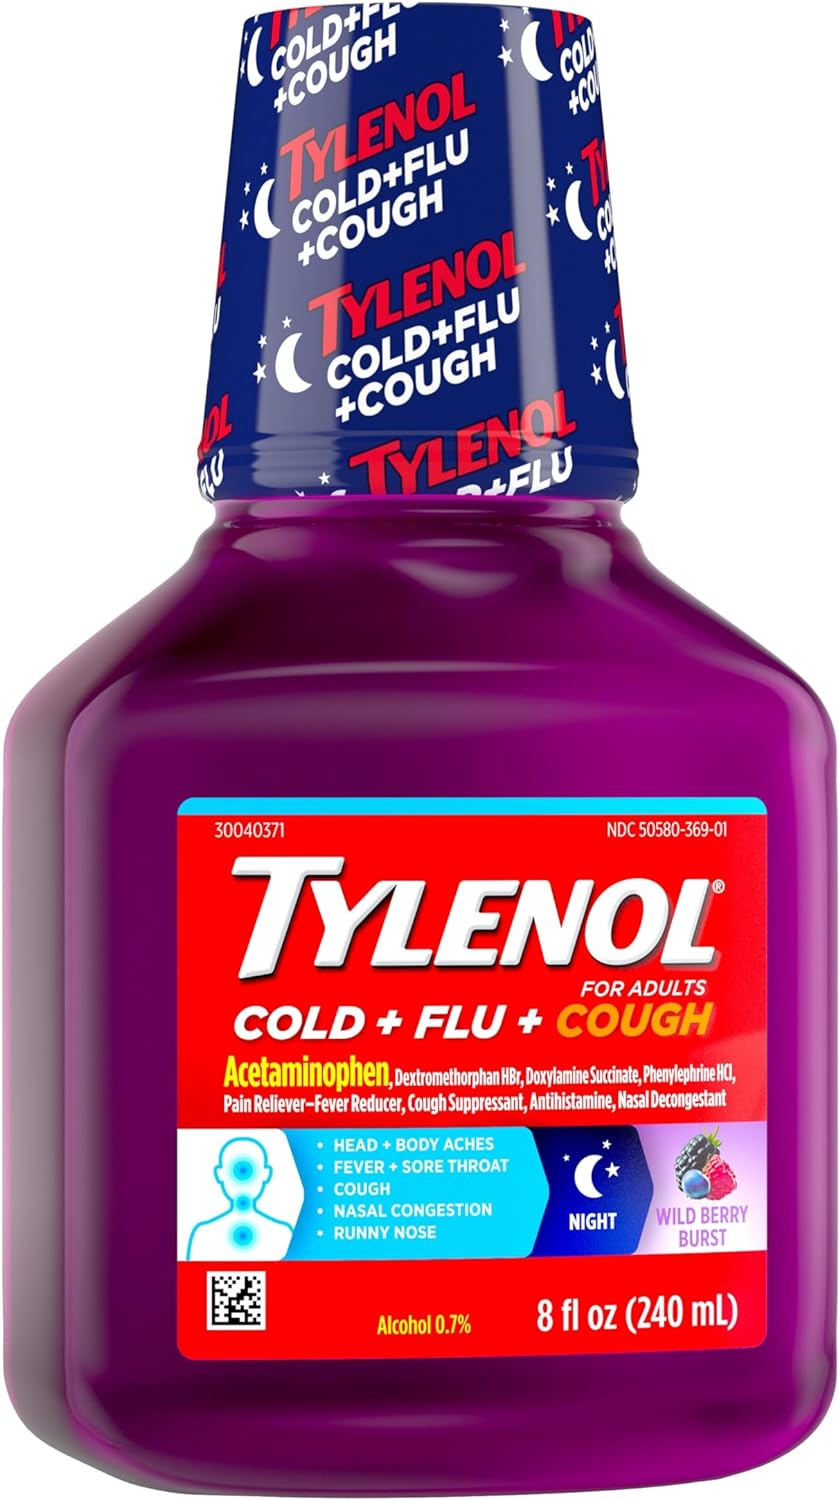 Tylenol Cold + Flu + Cough Night Liquid Medicine with Acetaminophen Pain Reliever & Fever Reducer, Cough Suppressant, Nasal Decongestant & Antihistamine, Wild Berry Burst Flavor, 8 fl. oz : Health & Household